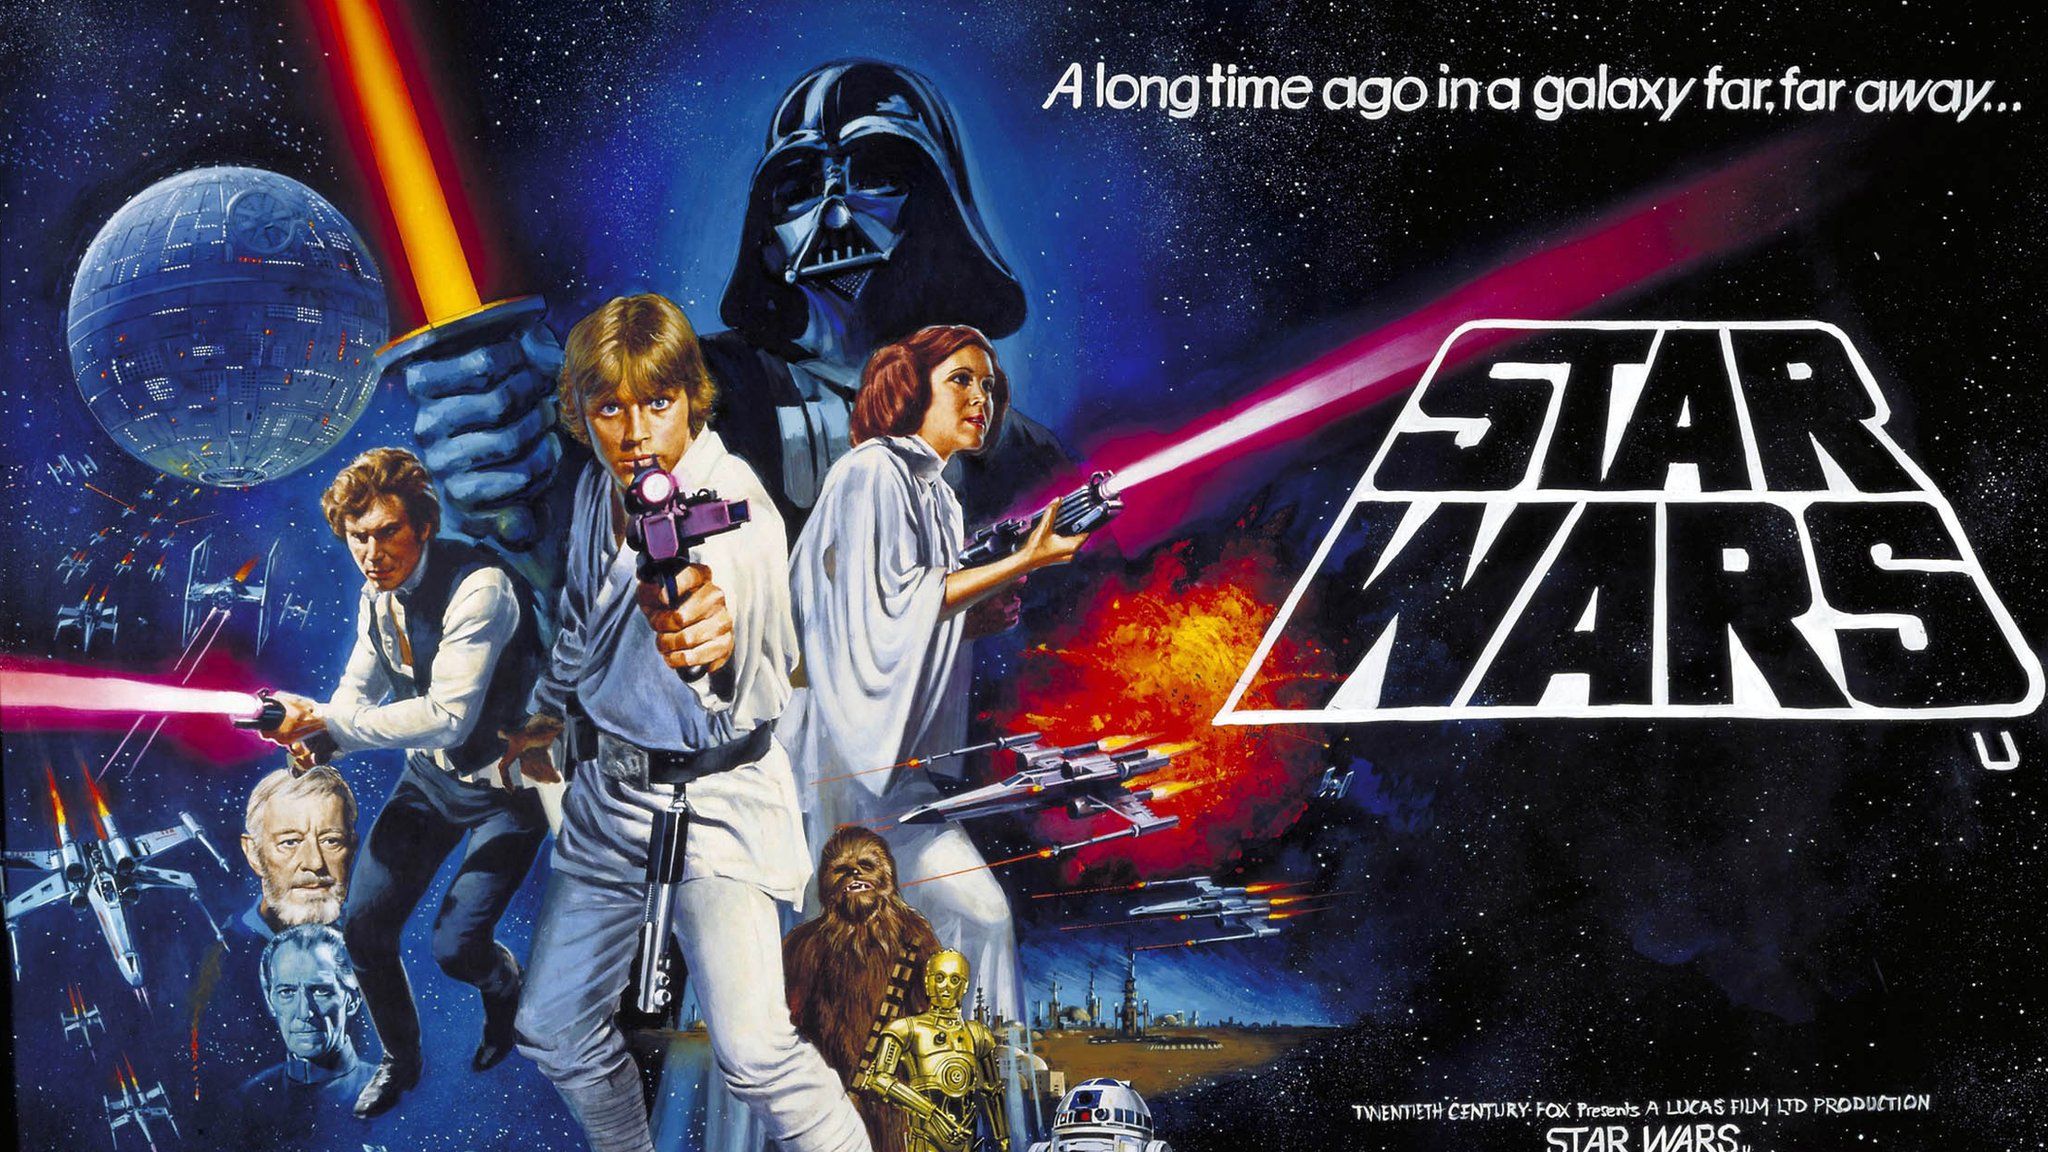 Star Wars (New Hope) film poster 1977